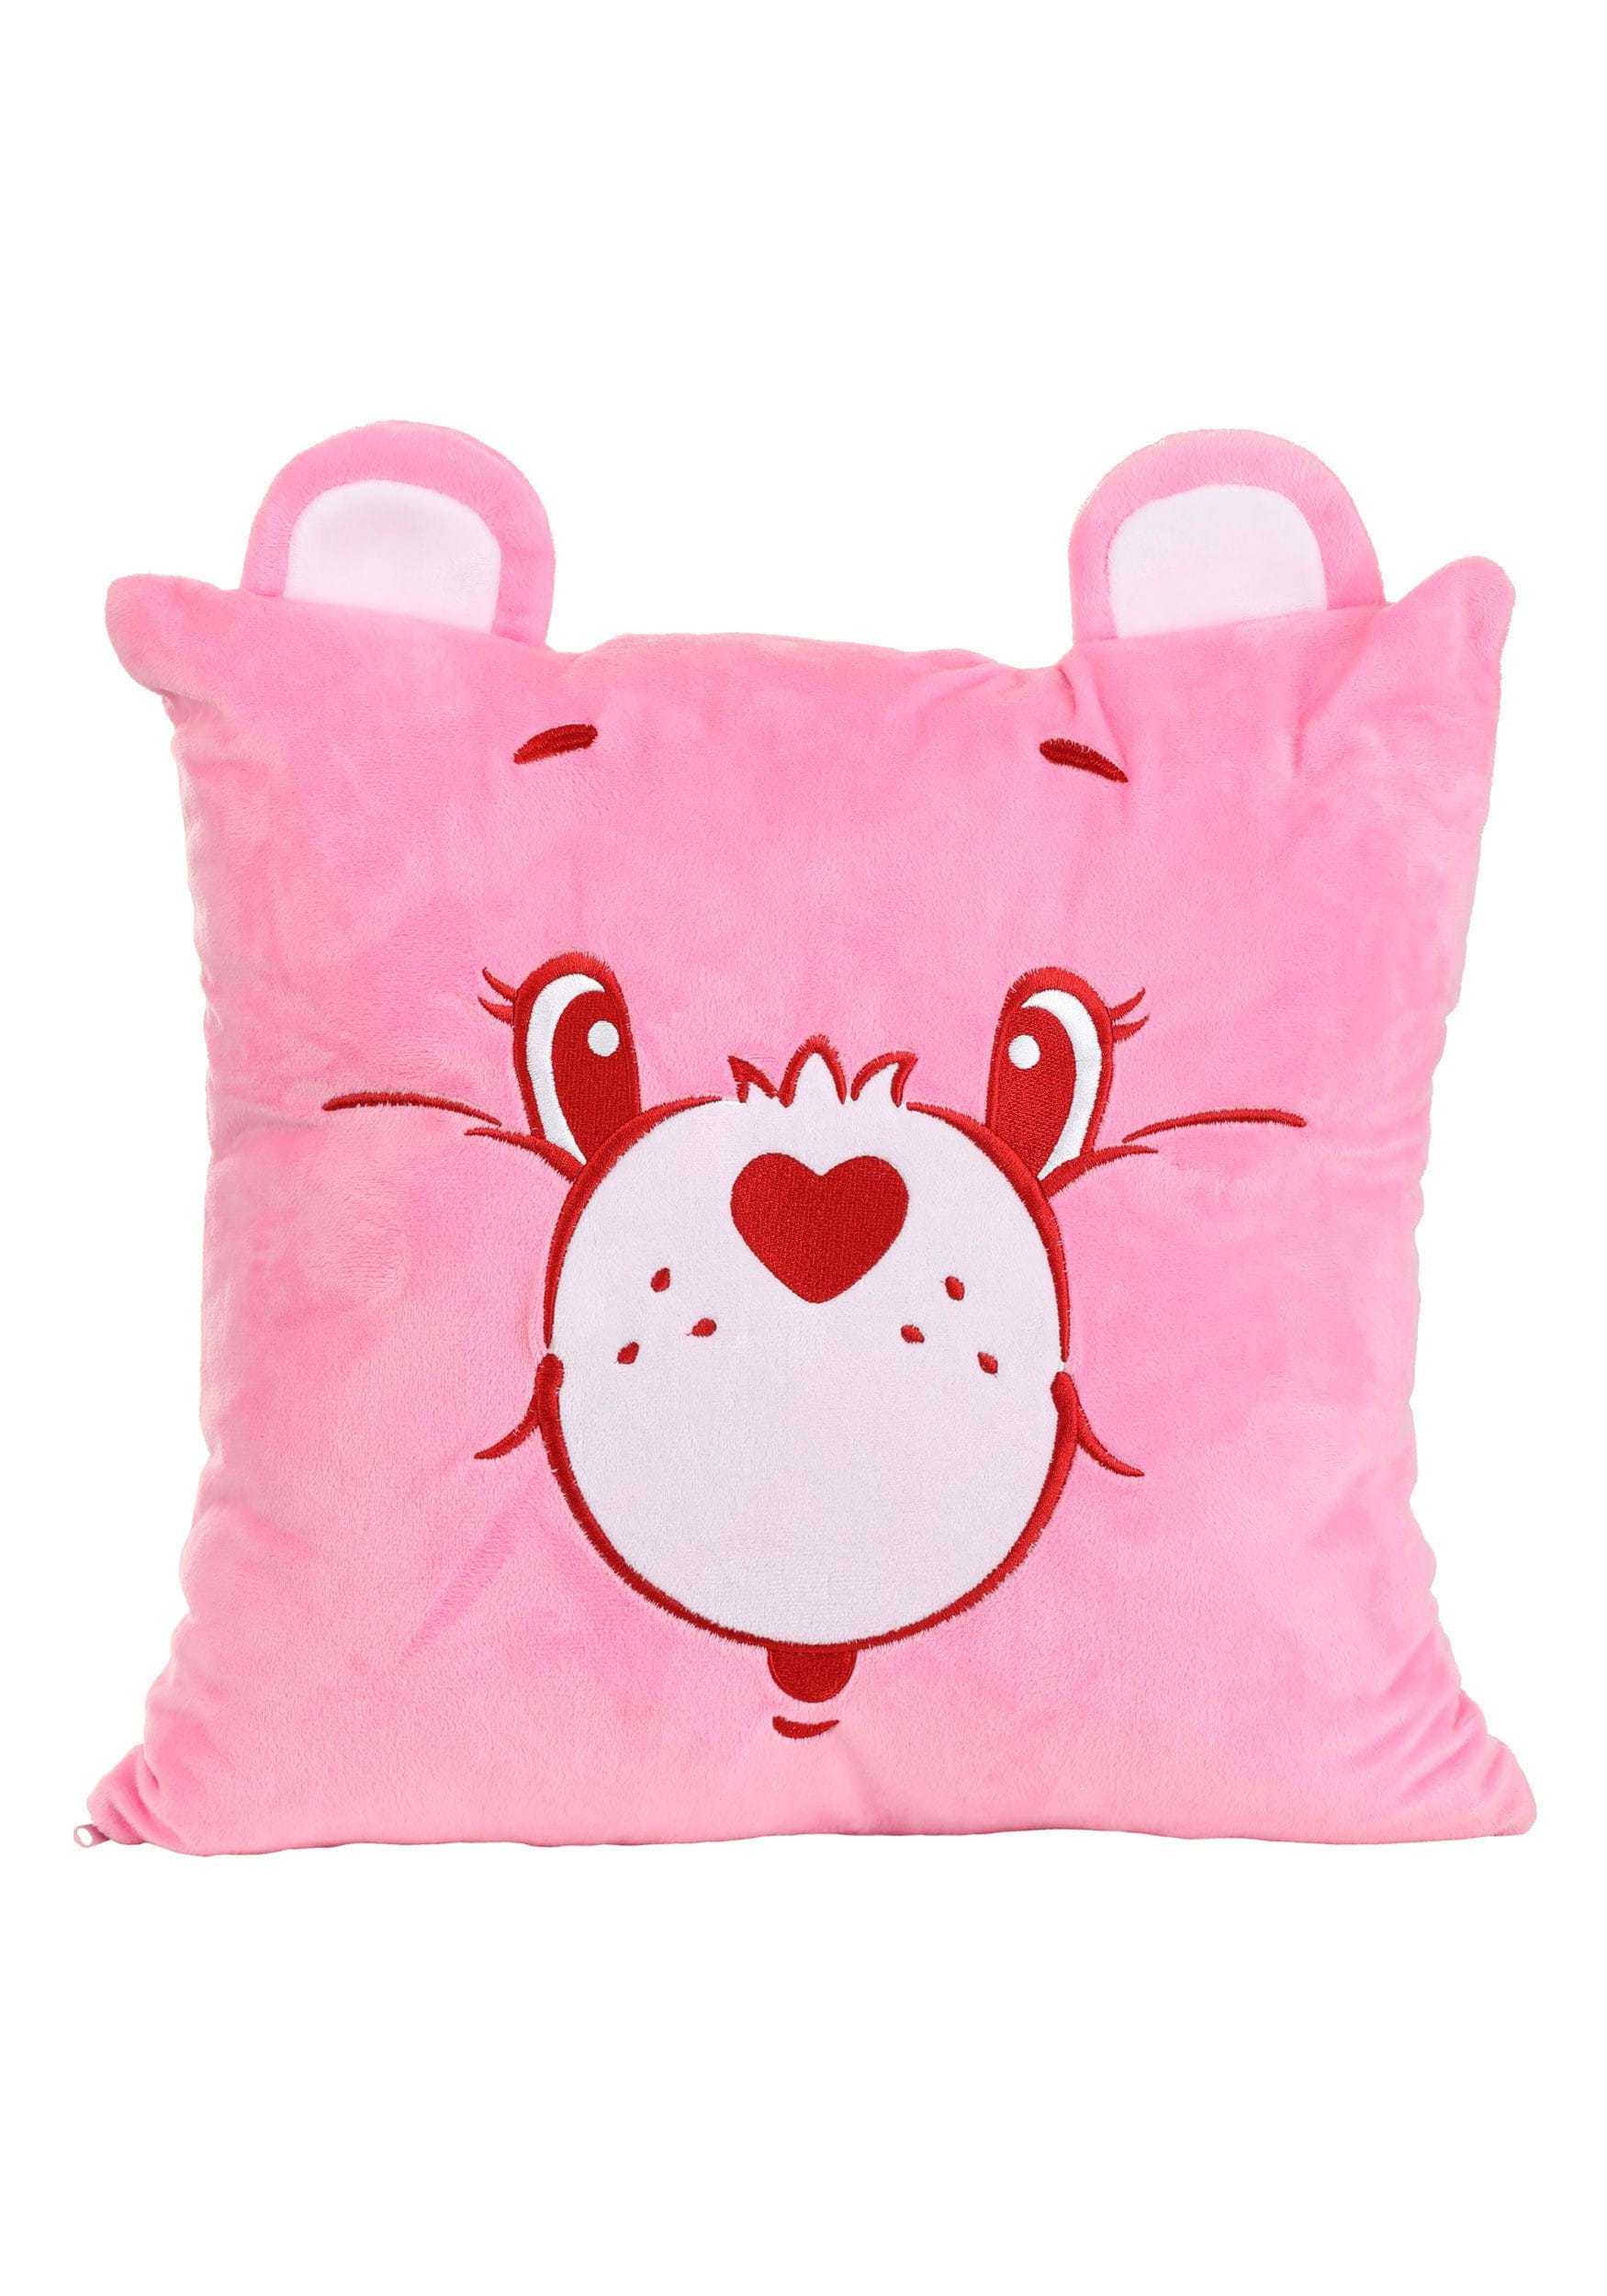 Care Bears: Cheer Bear Pillow